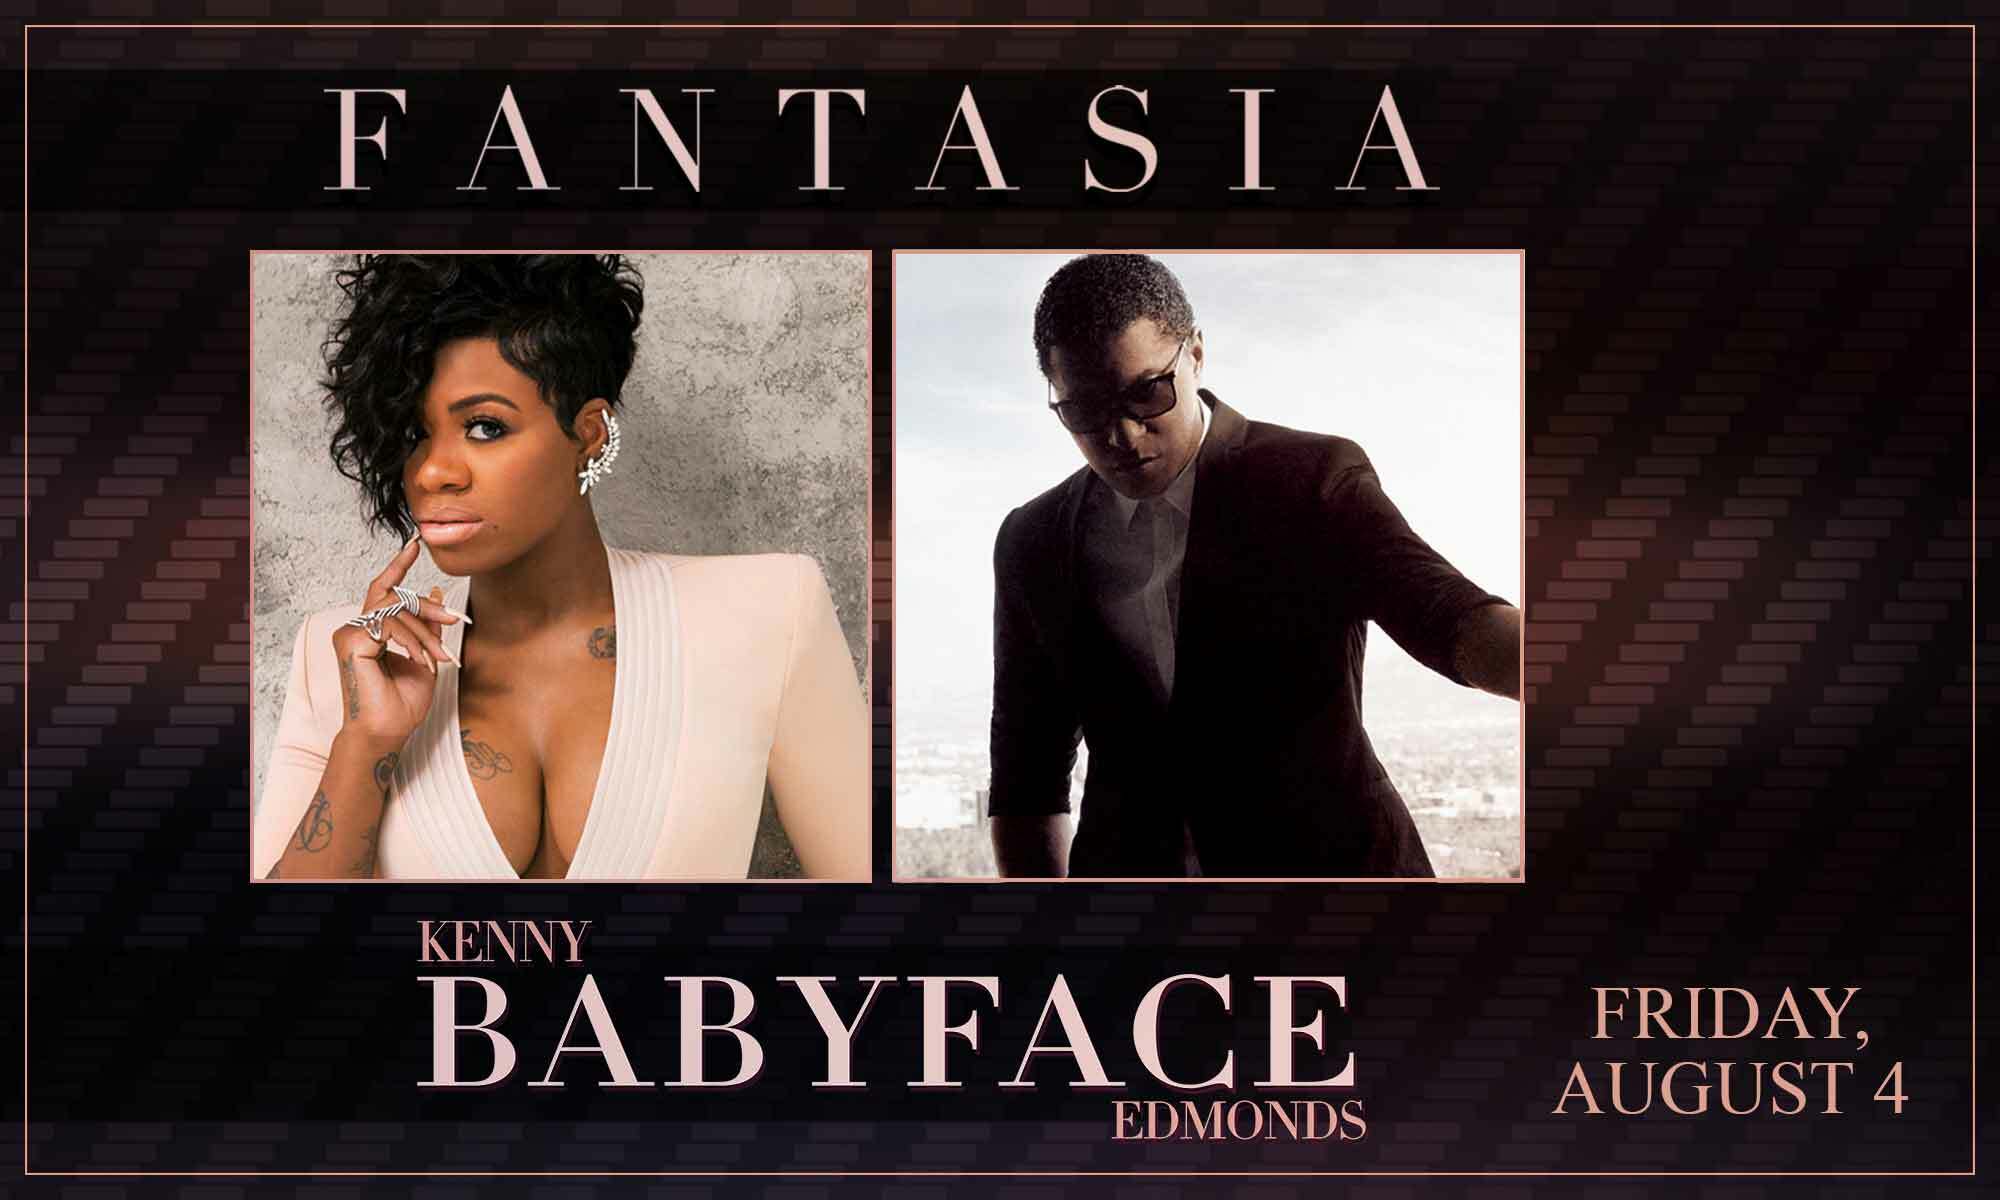 Fantasia & Kenny “Babyface” Edmonds Live Show